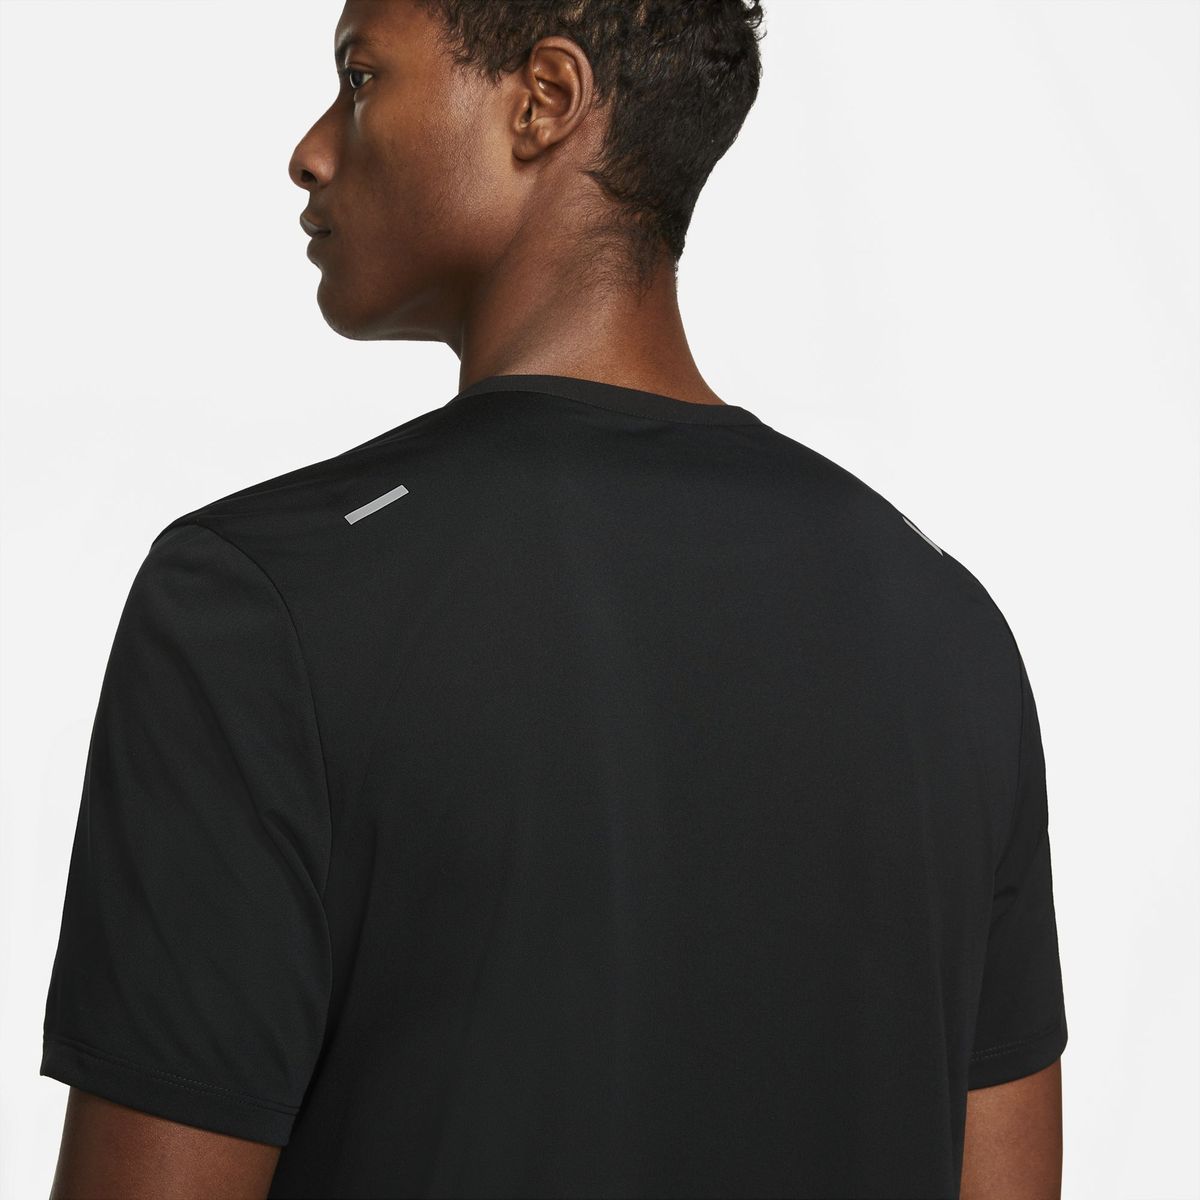 Nike Dri-FIT Rise 365 Top Herren T-Shirt_4